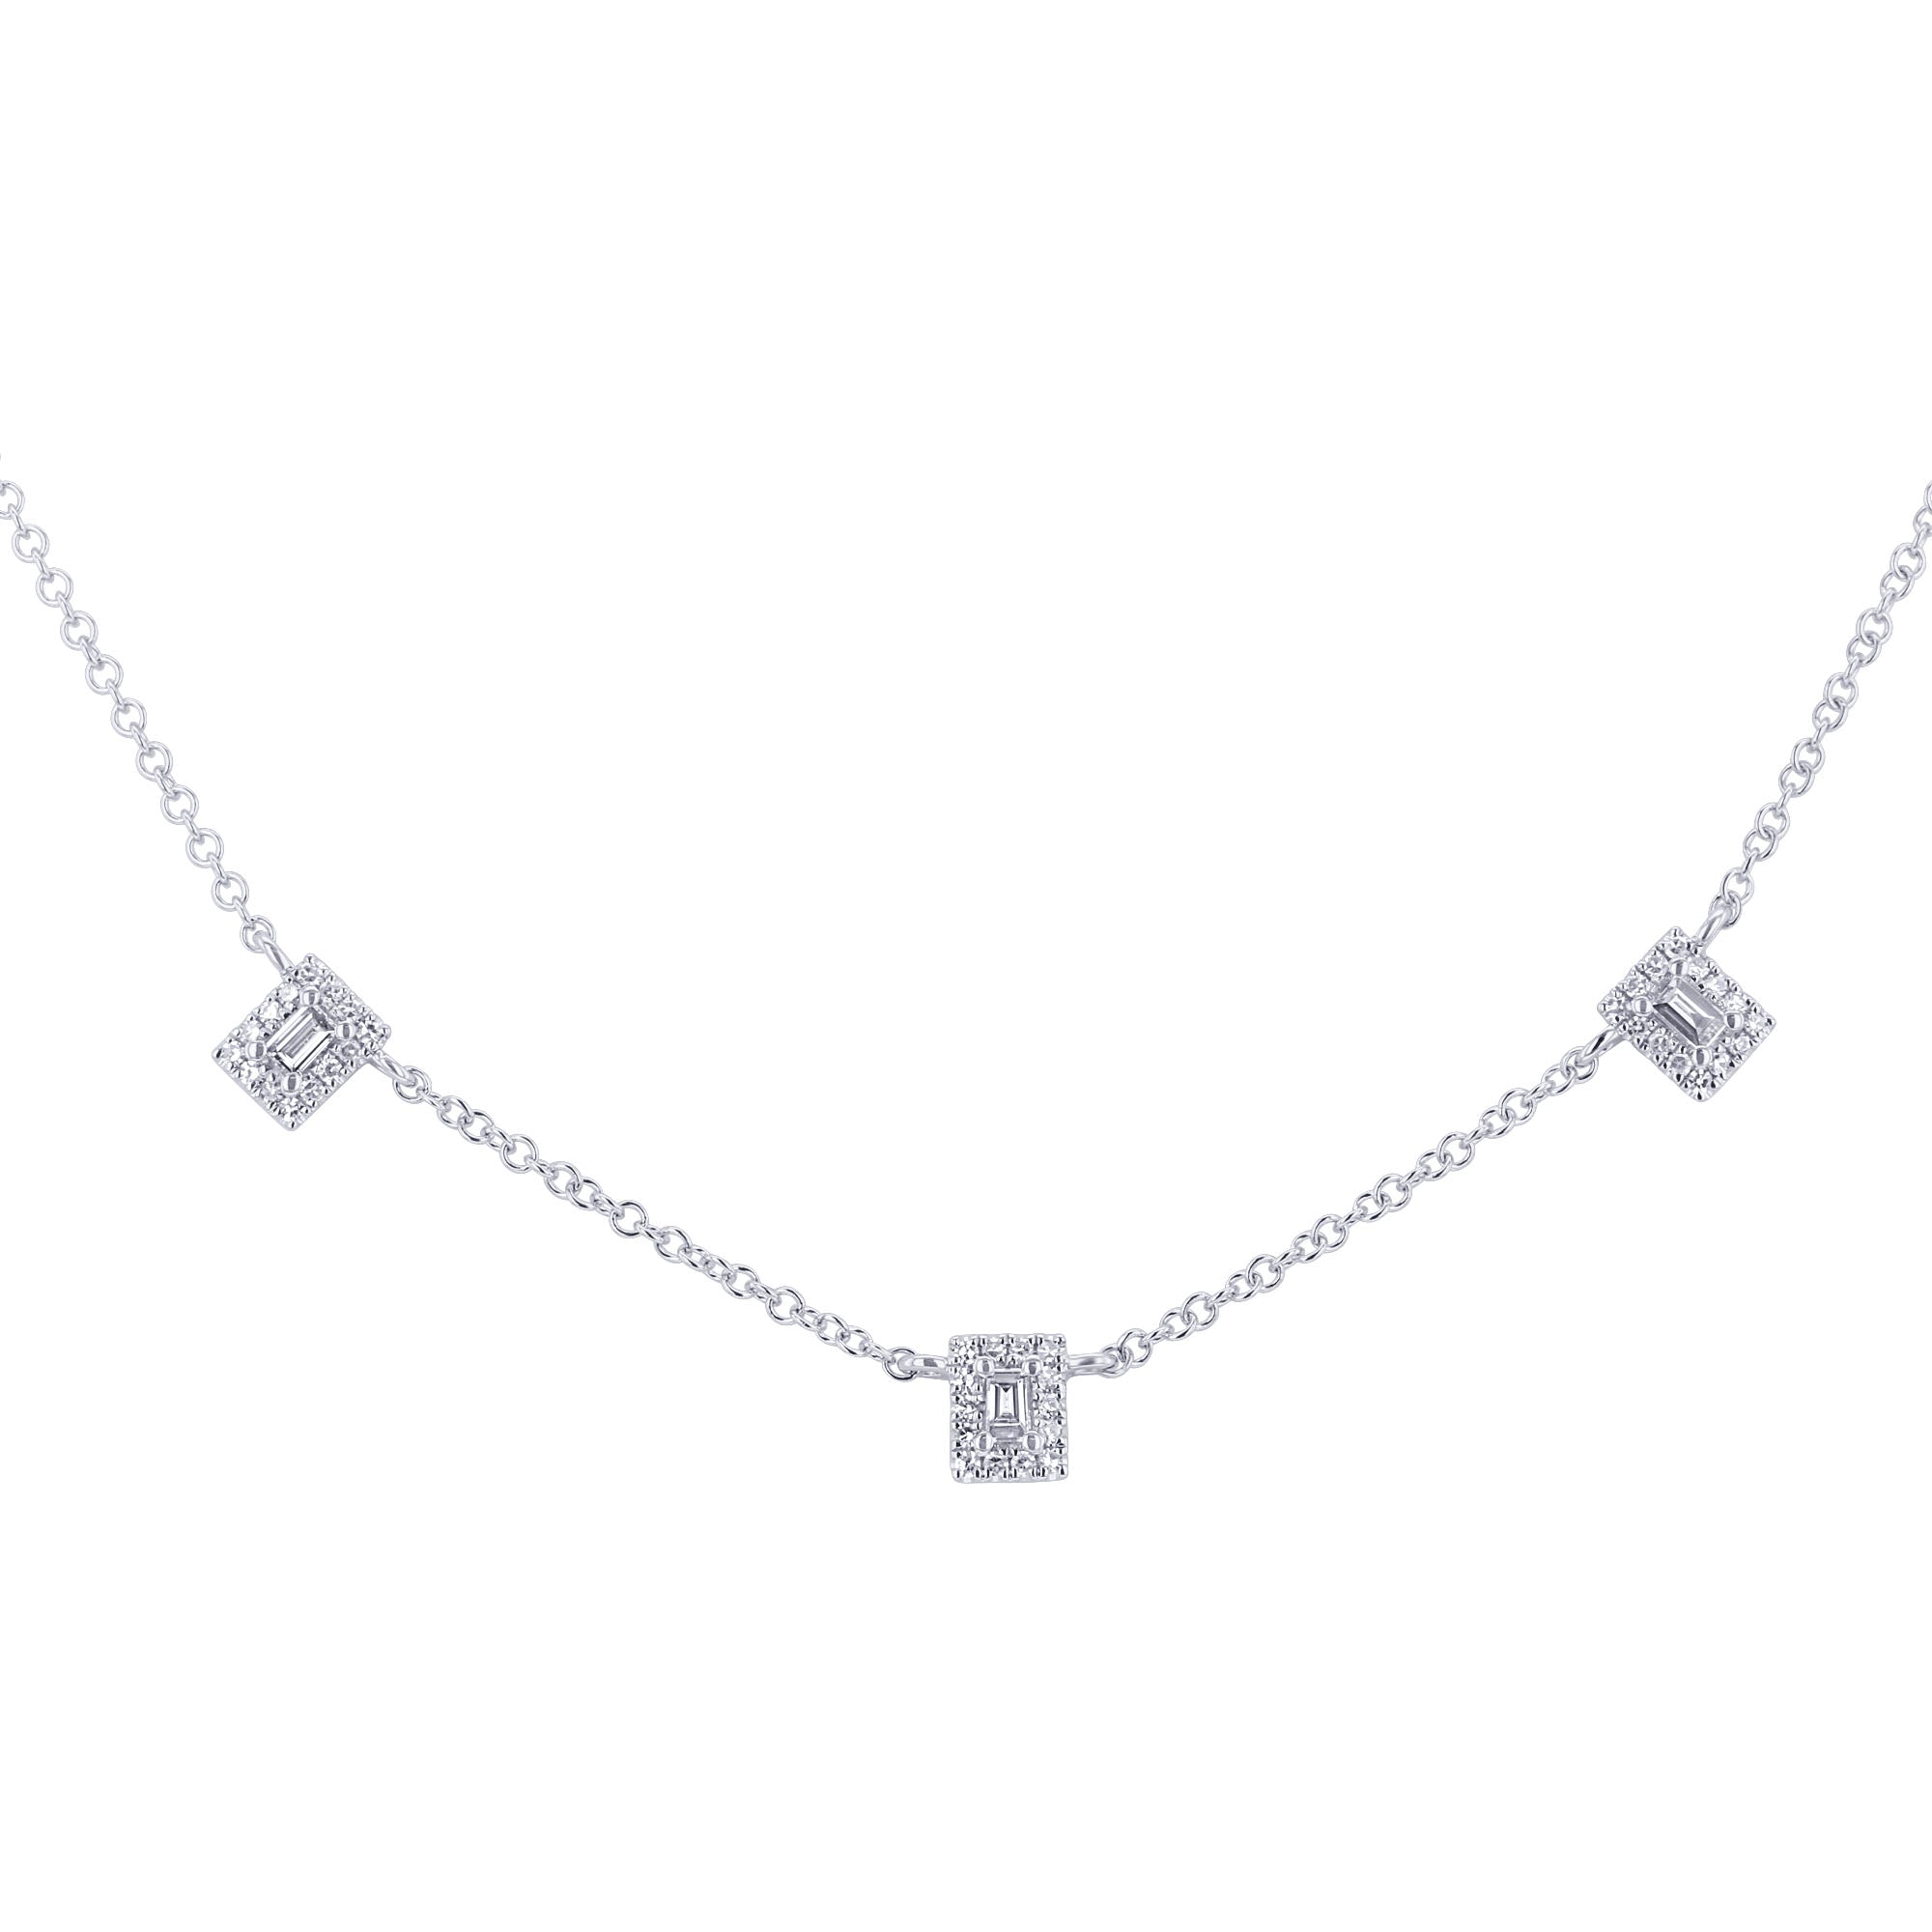 Bespoke Baguette Station Diamond Necklace